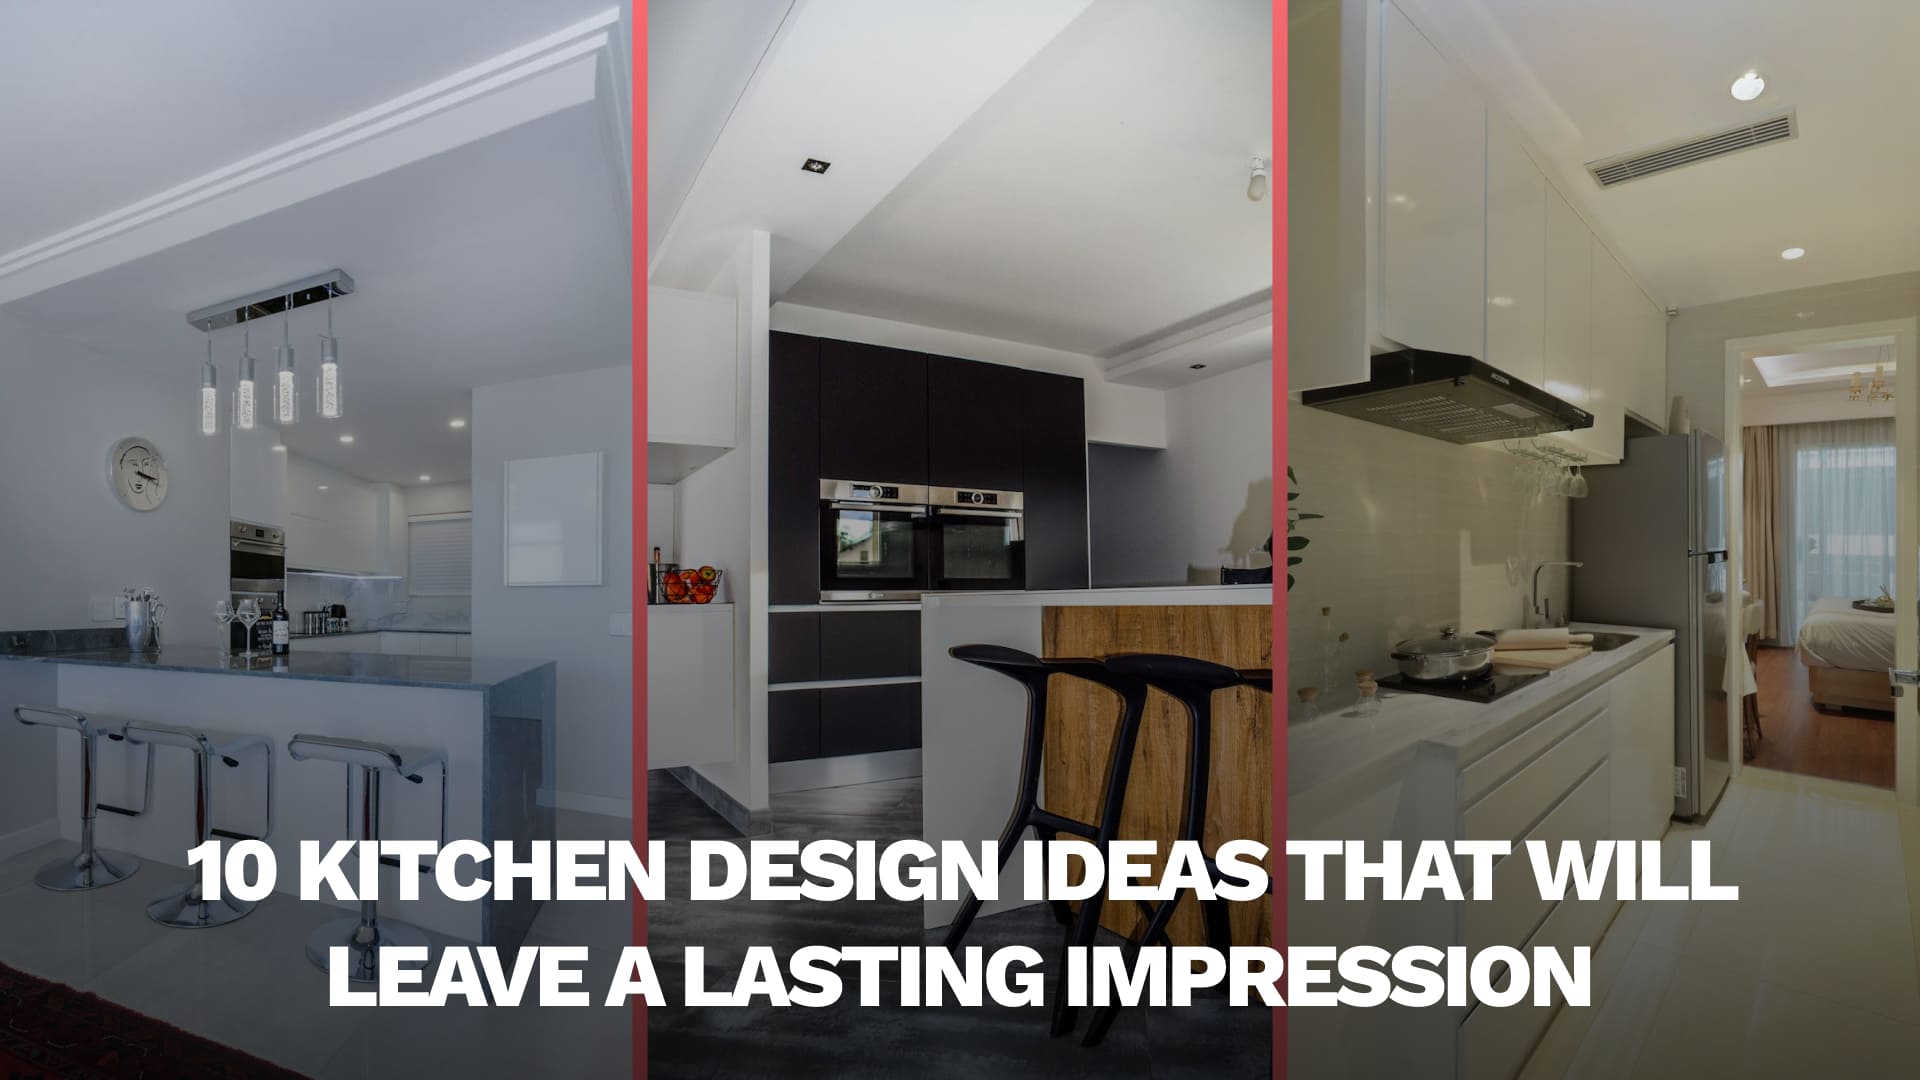 10 Kitchen Design Ideas That Will Leave a Lasting Impression